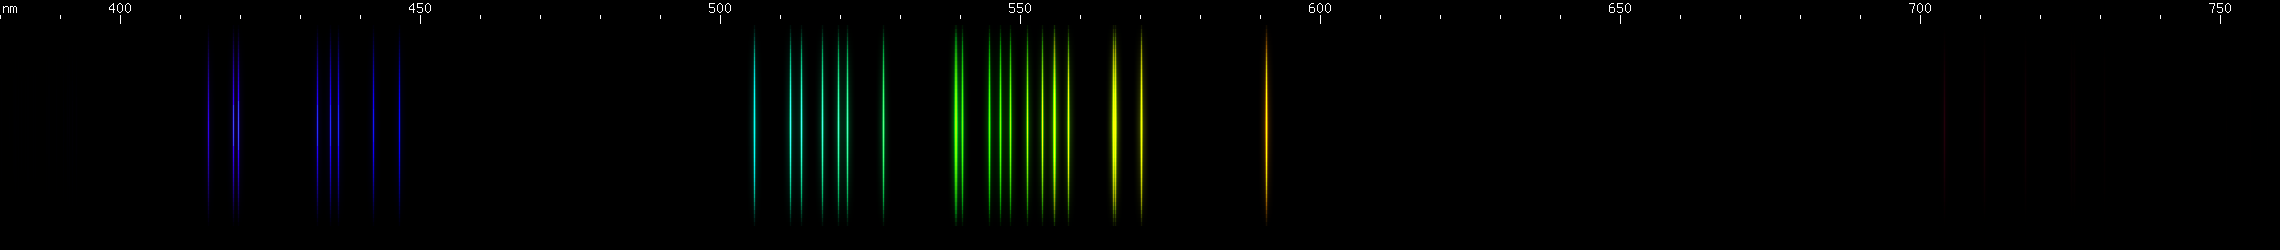 Spectral Lines of Berkelium